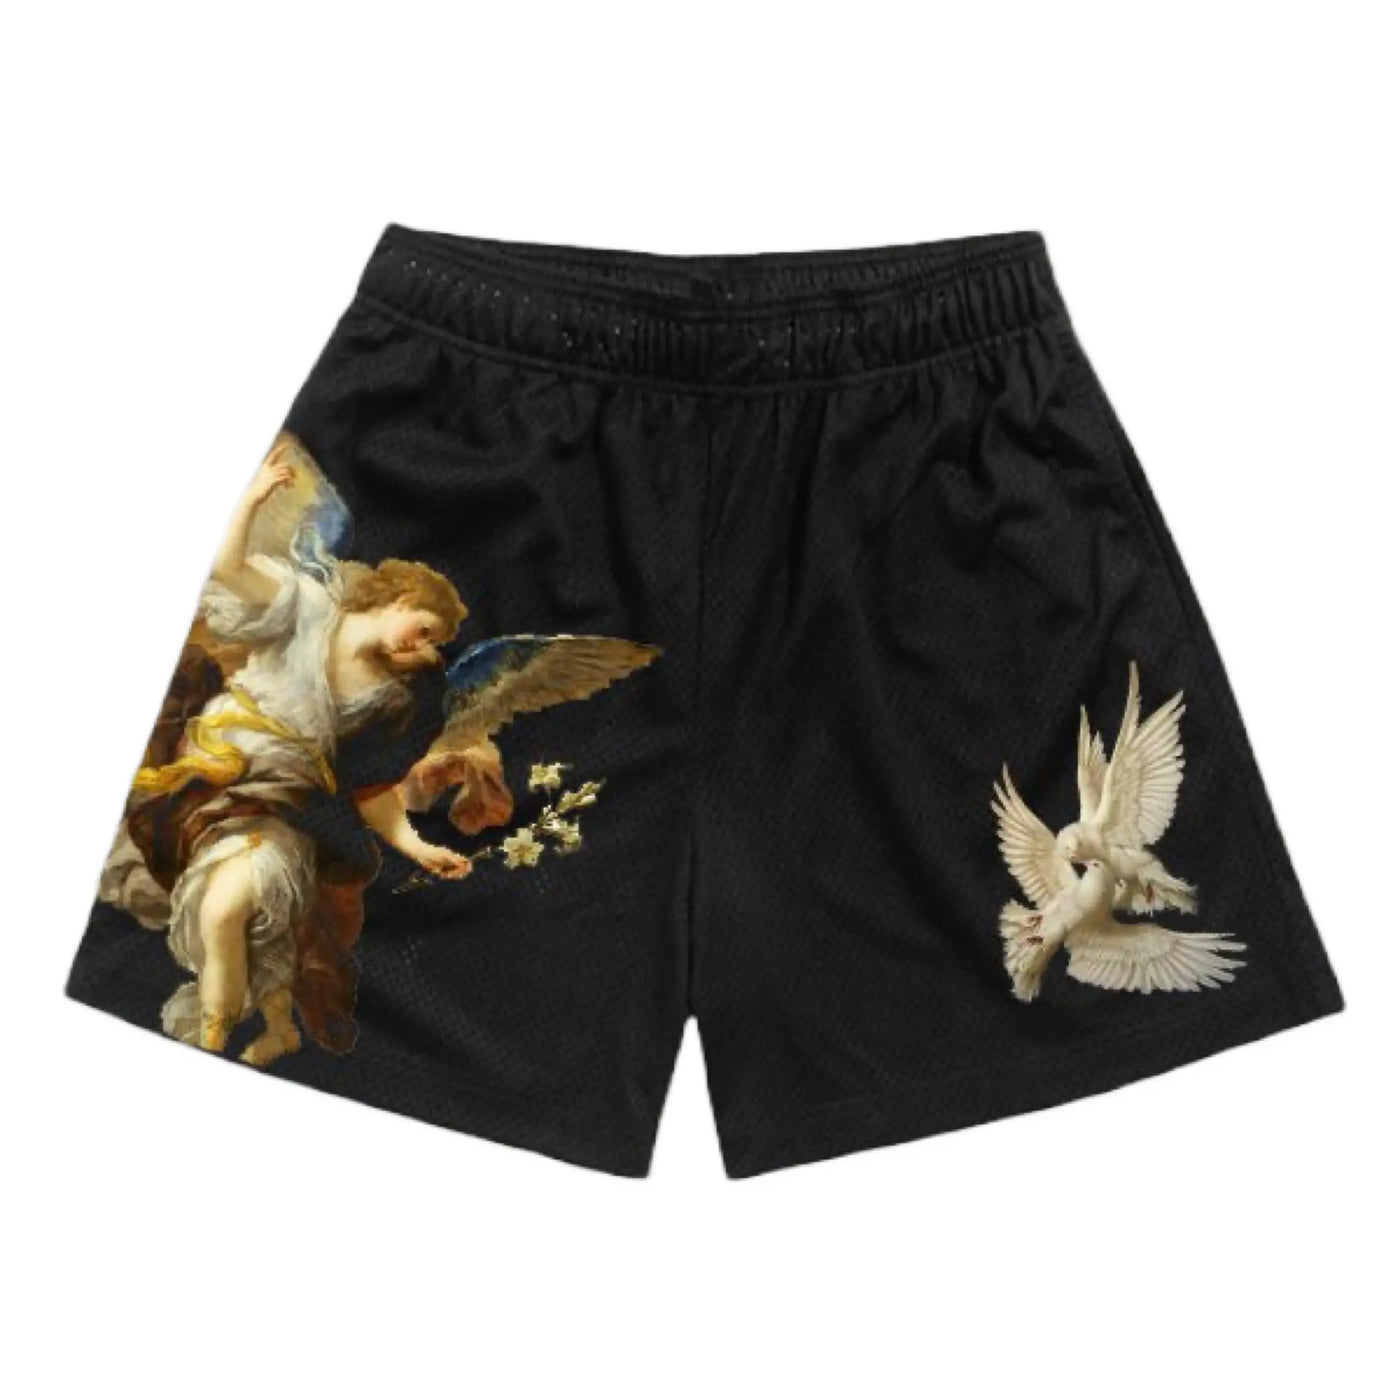 Angel shorts